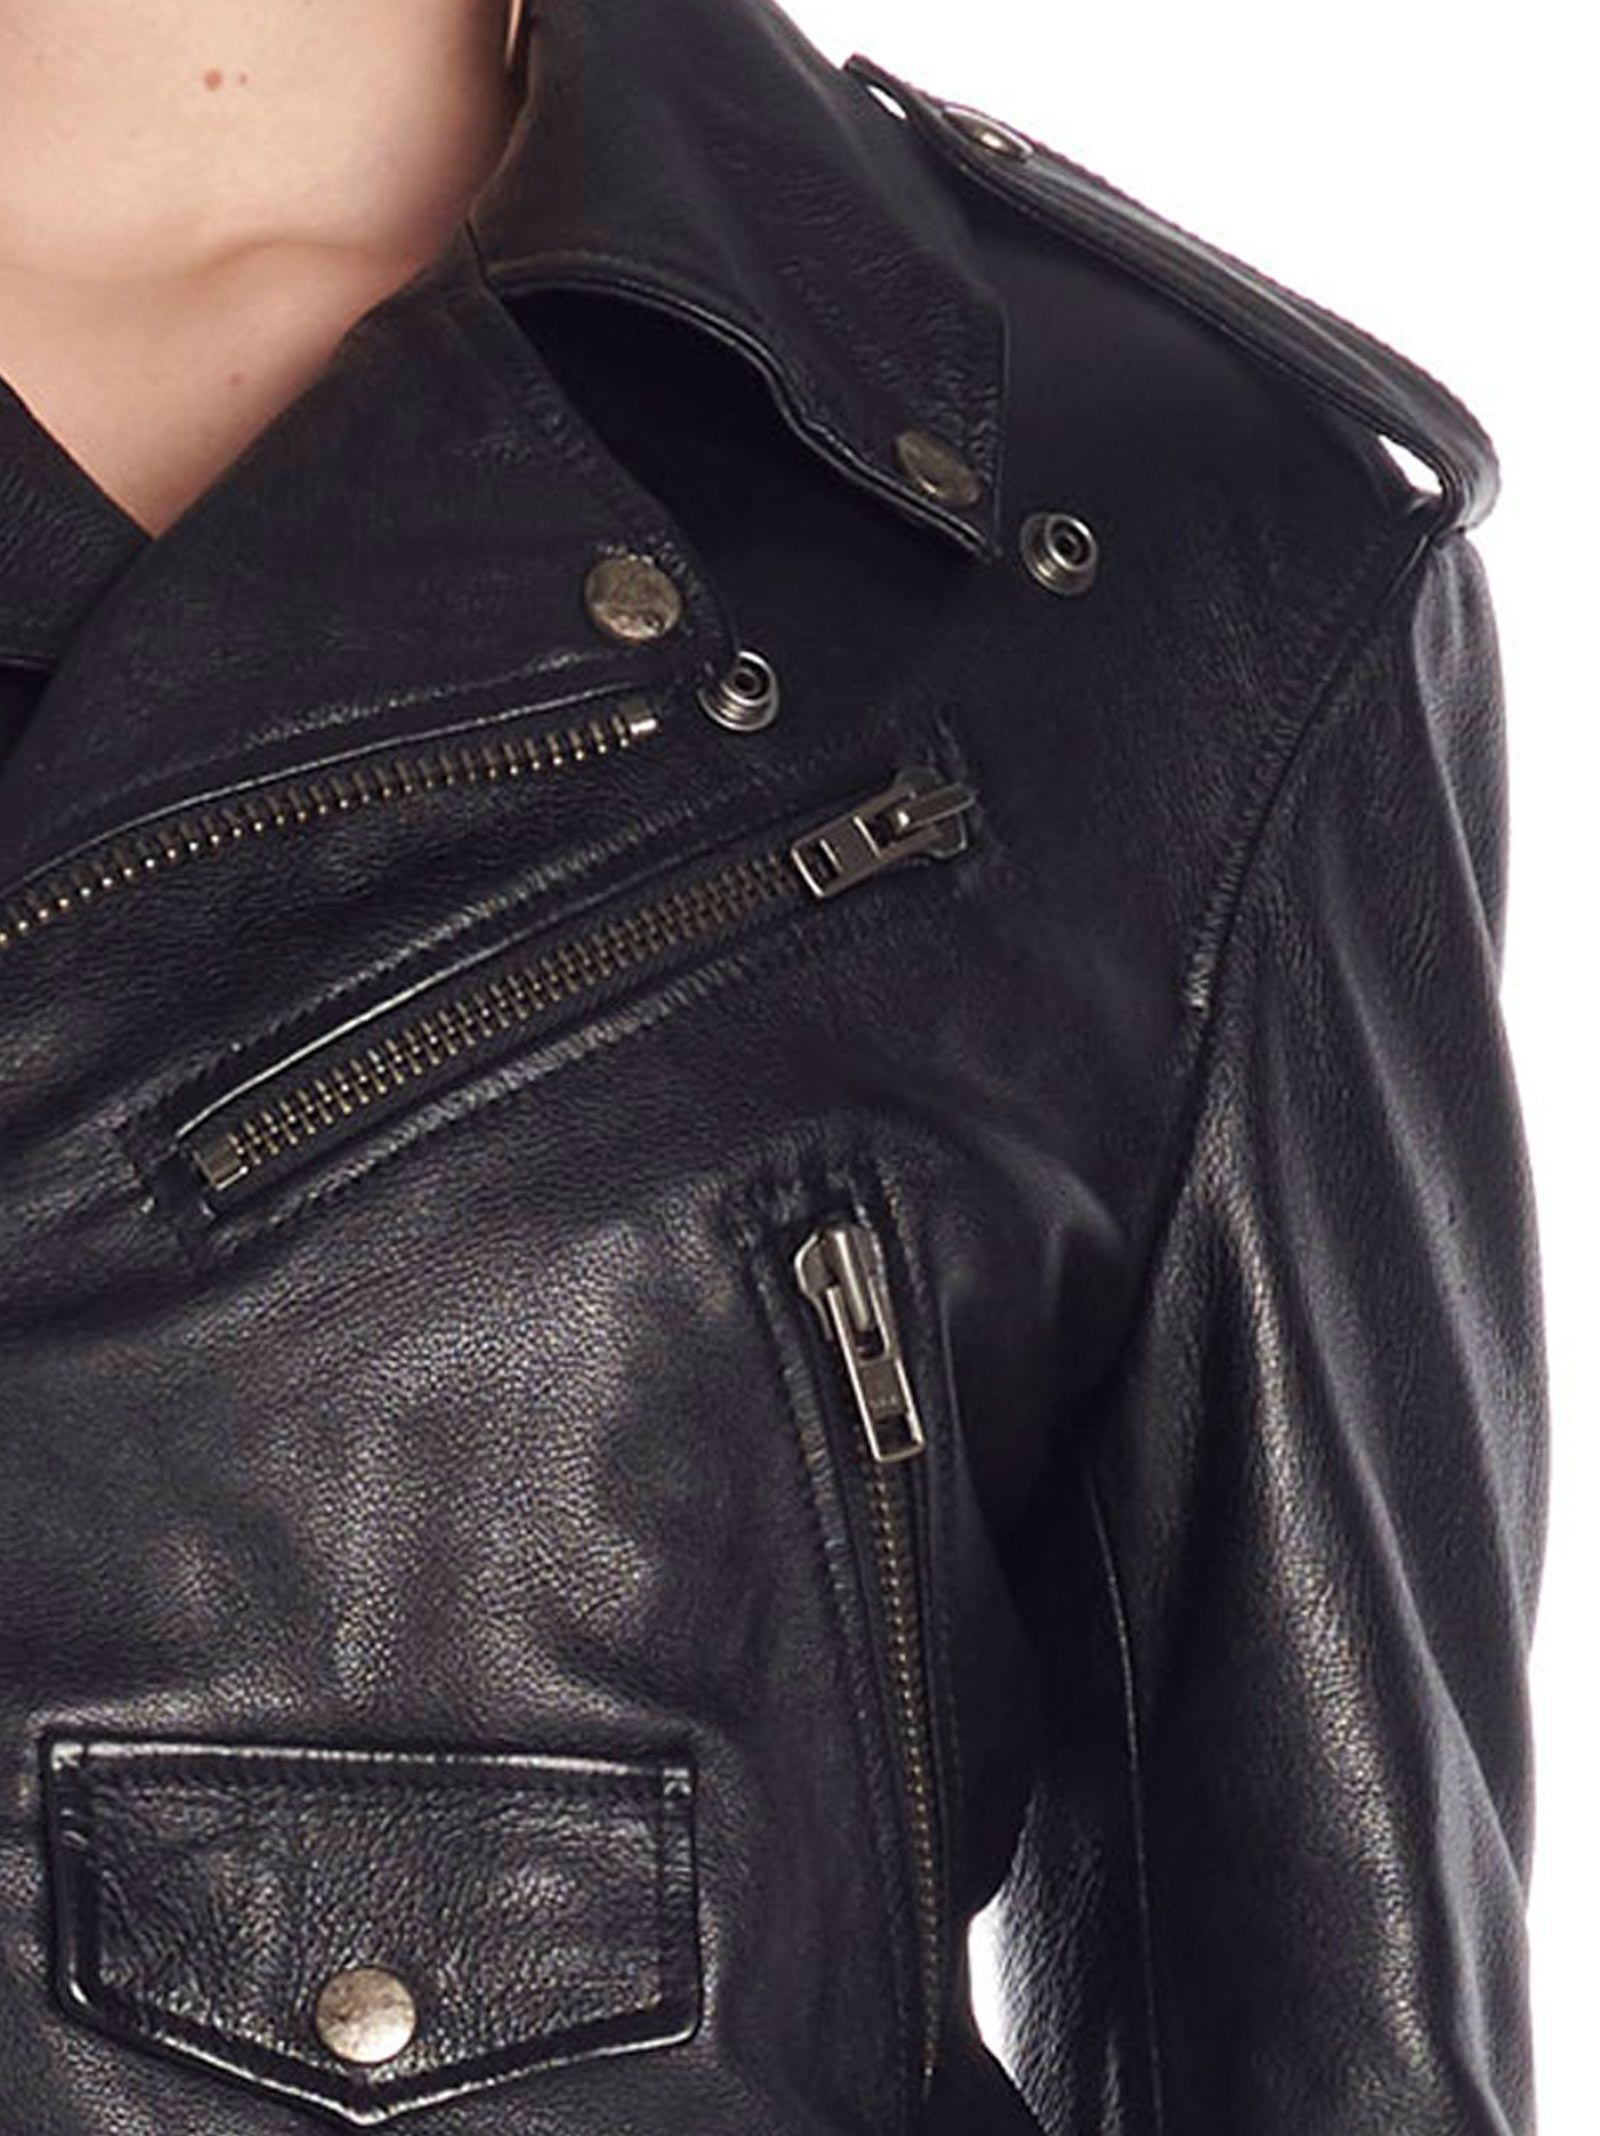 balenciaga leather jacket size guide